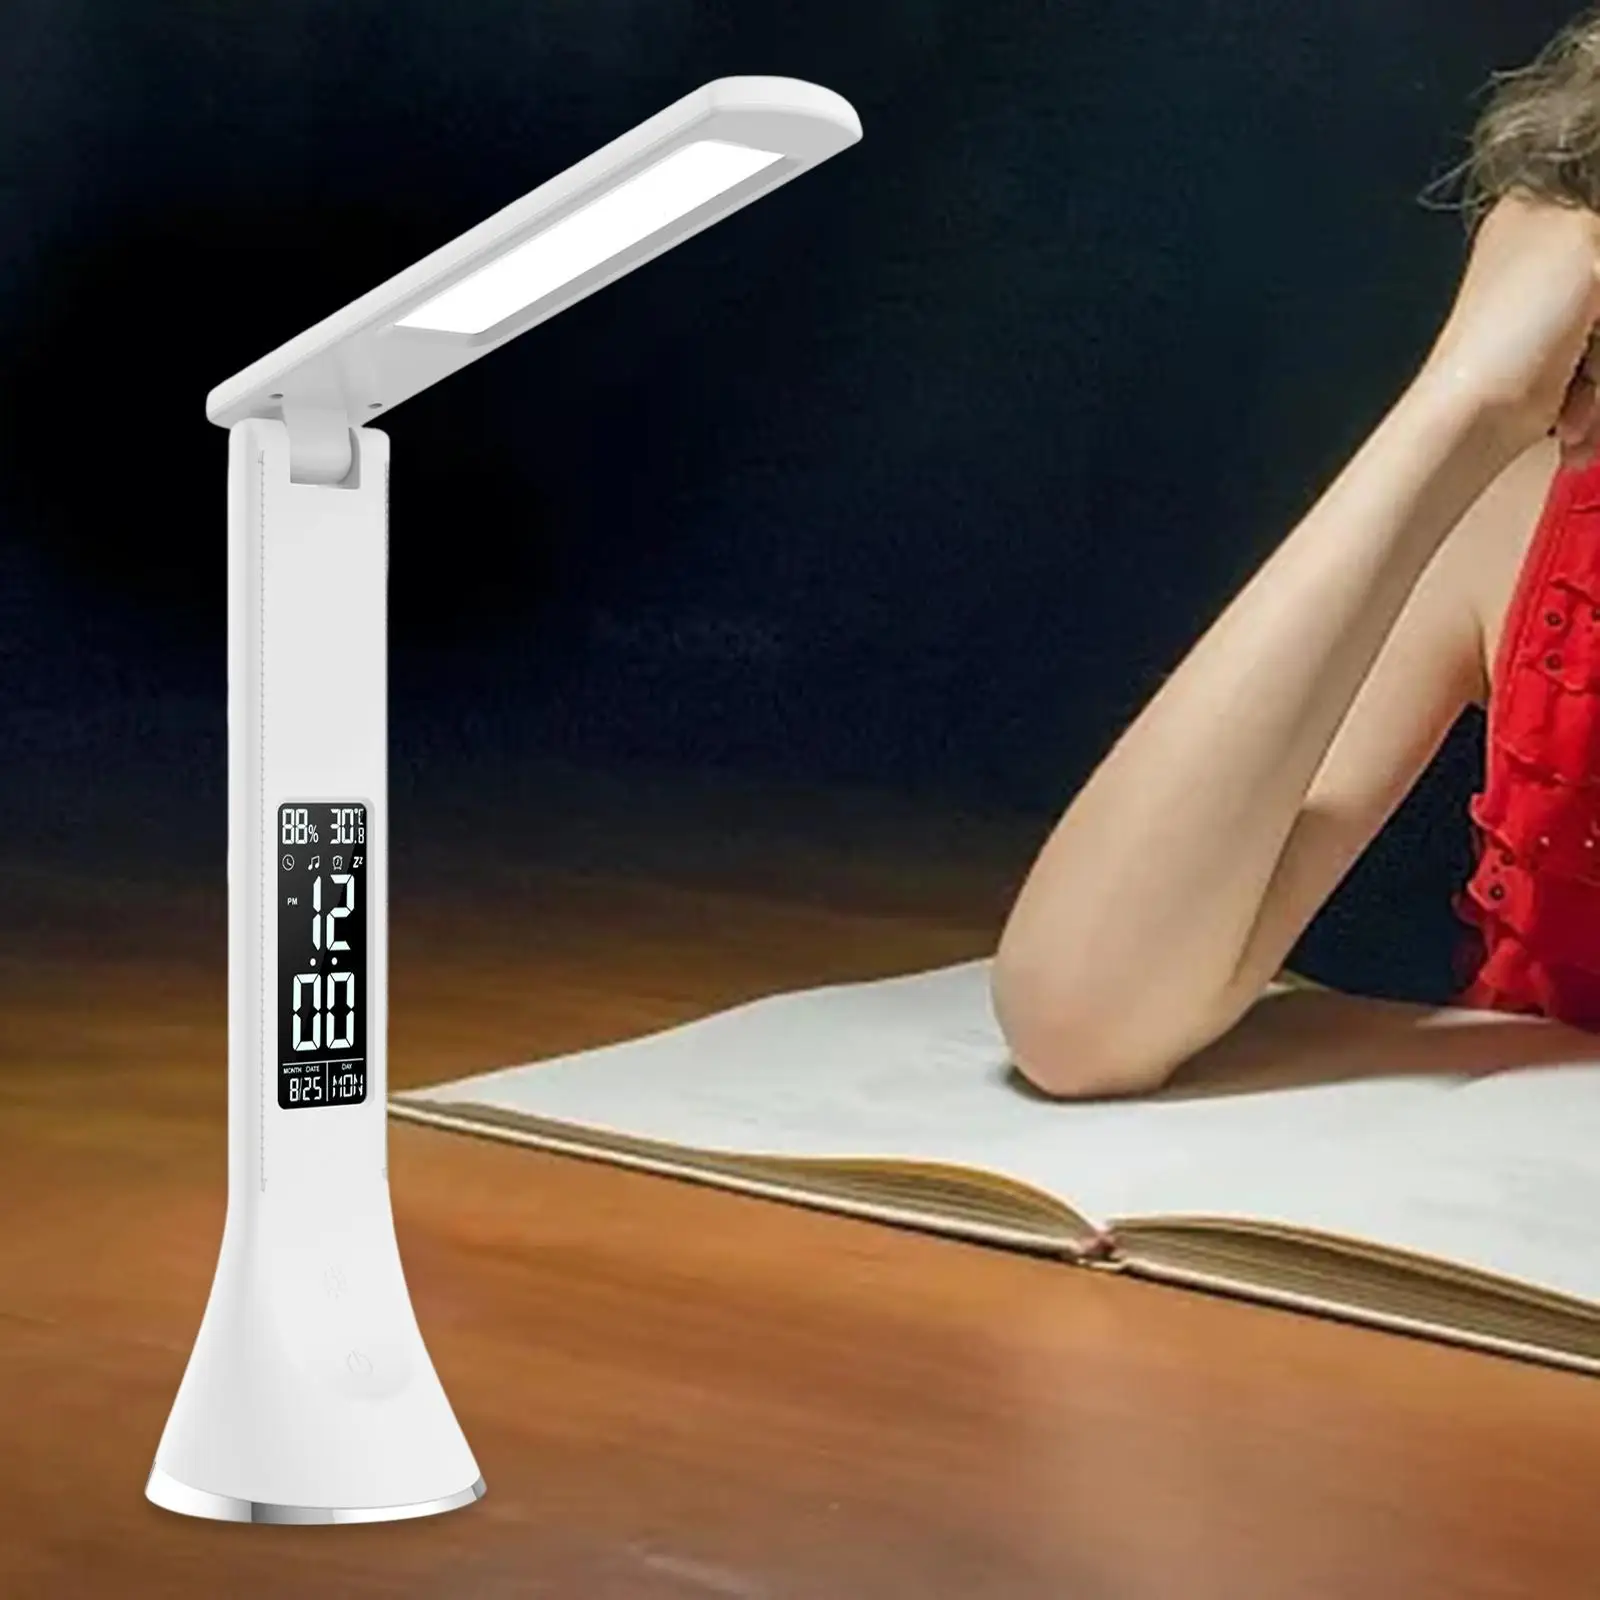 LED Desk Lamp Humidity Time Weeks Date Folded Alarm Clock Desktop Table Light Reading Light Room Home Bedroom Office Gift